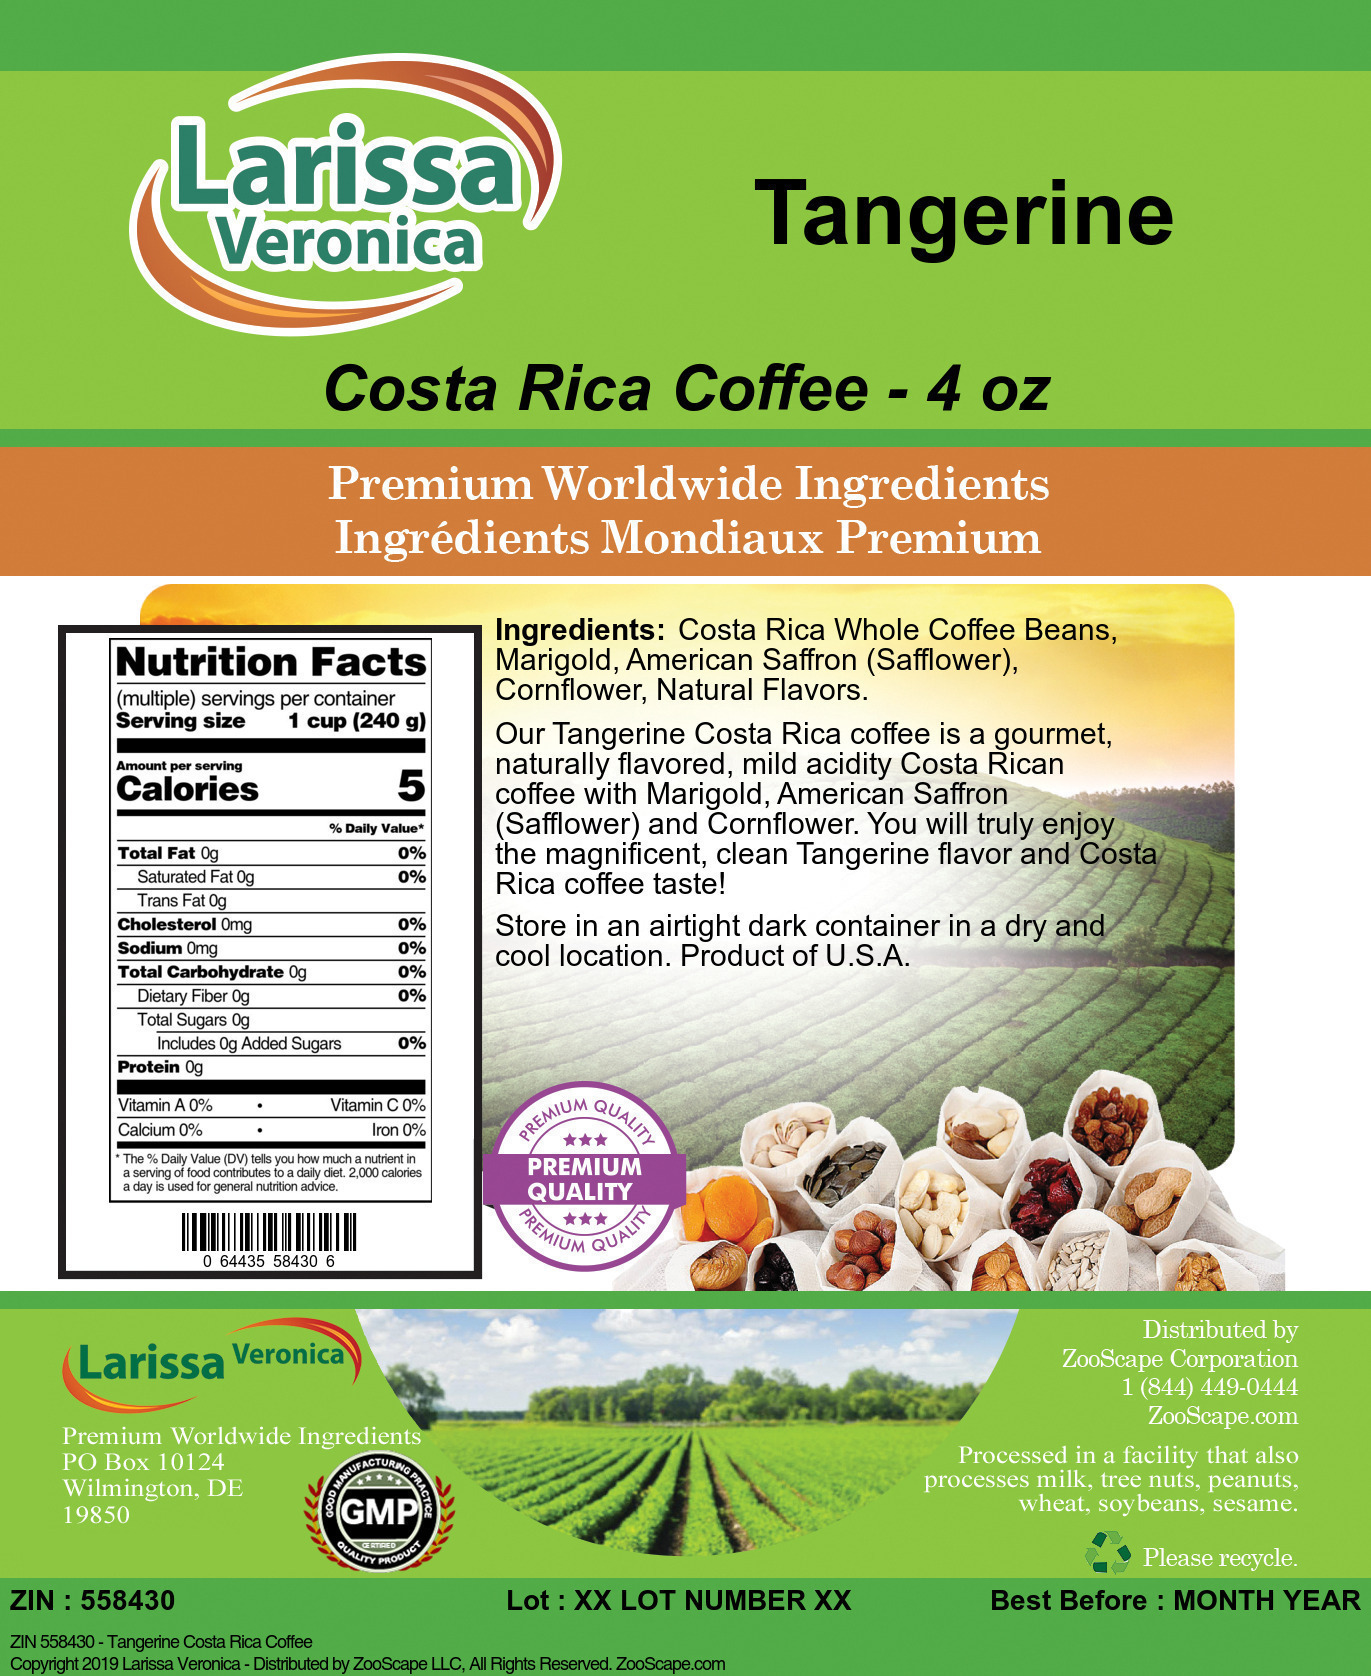 Tangerine Costa Rica Coffee - Label